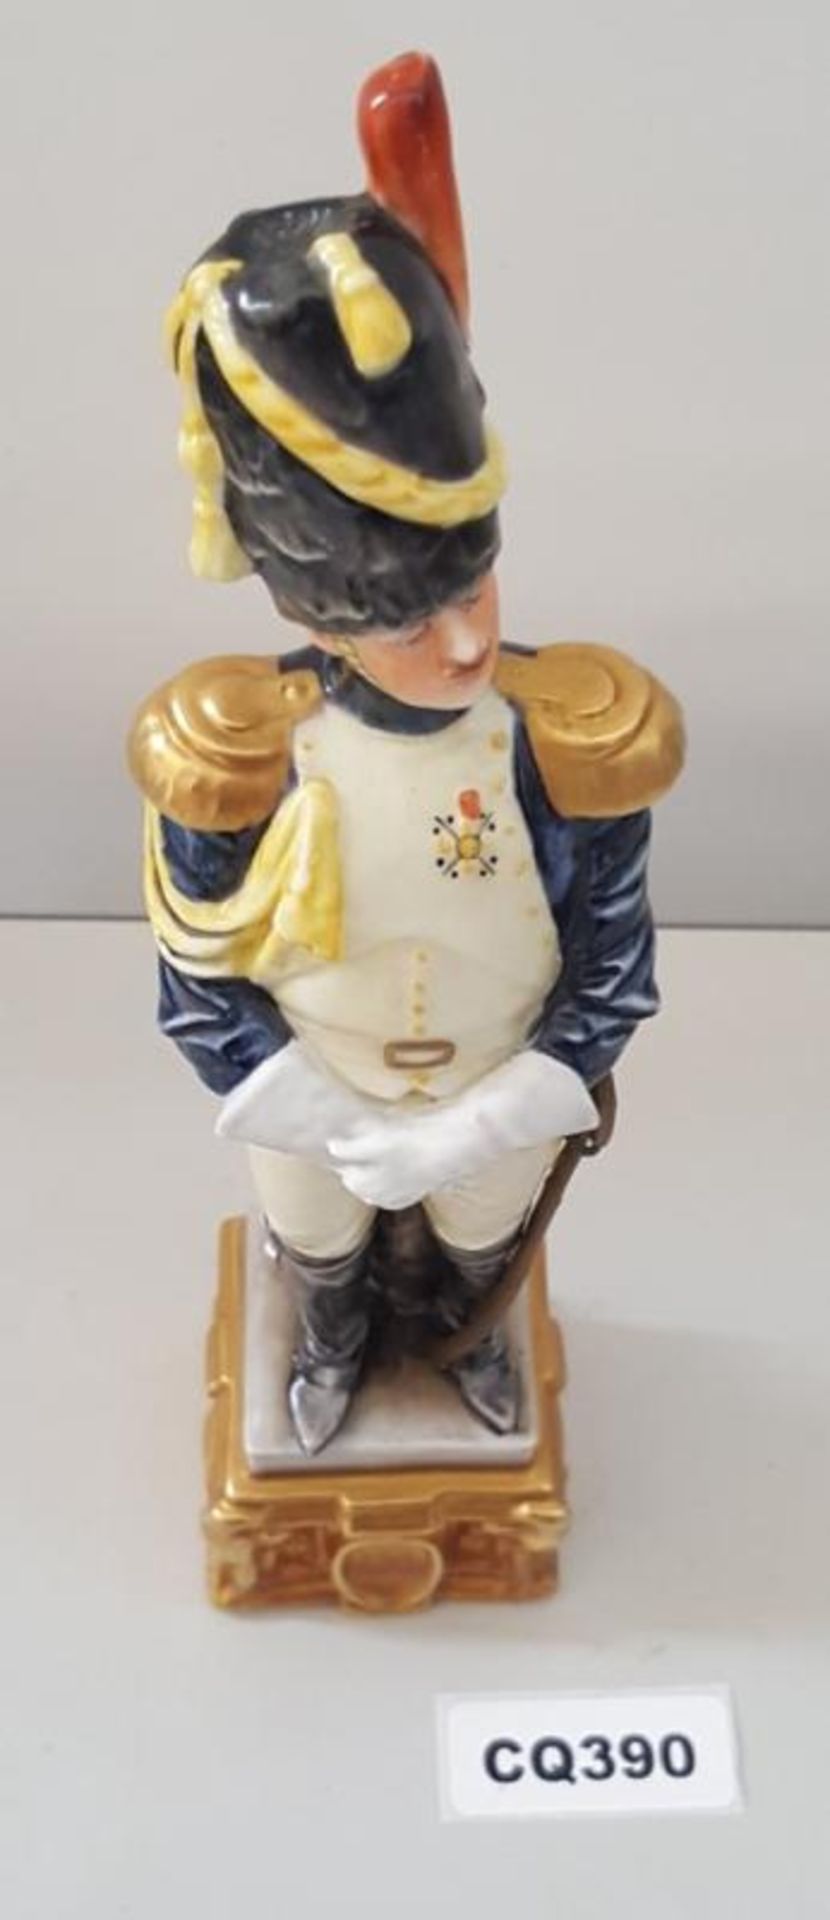 1 x Rare Italian Capodimonte Porcelain Bruno Merli Soldiers Figurines - Ref CQ390 E - Image 5 of 5